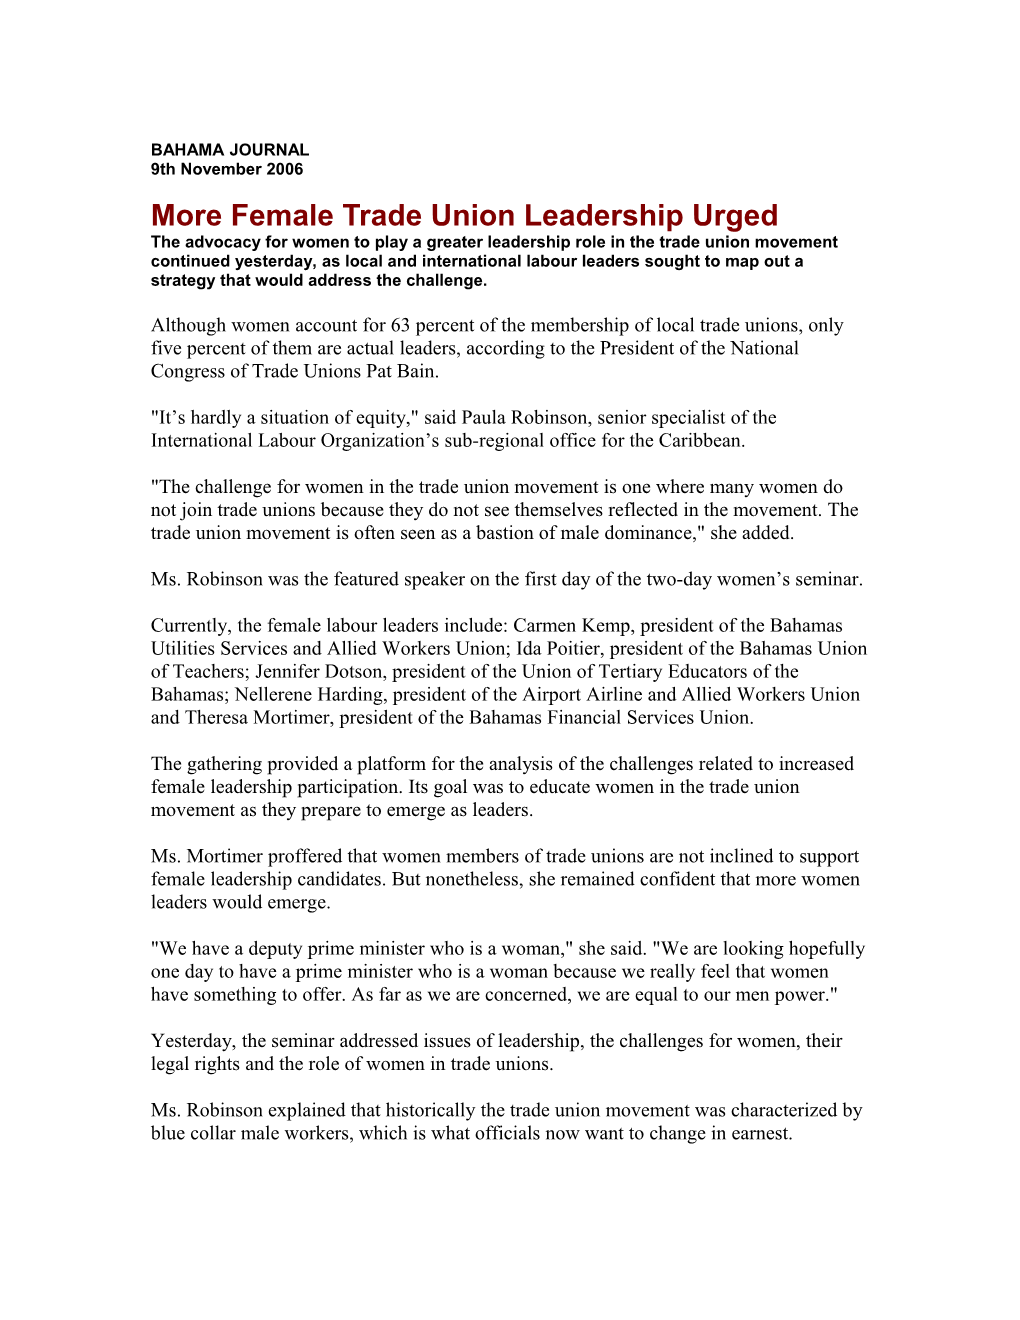 More Female Trade Union Leadership Urged